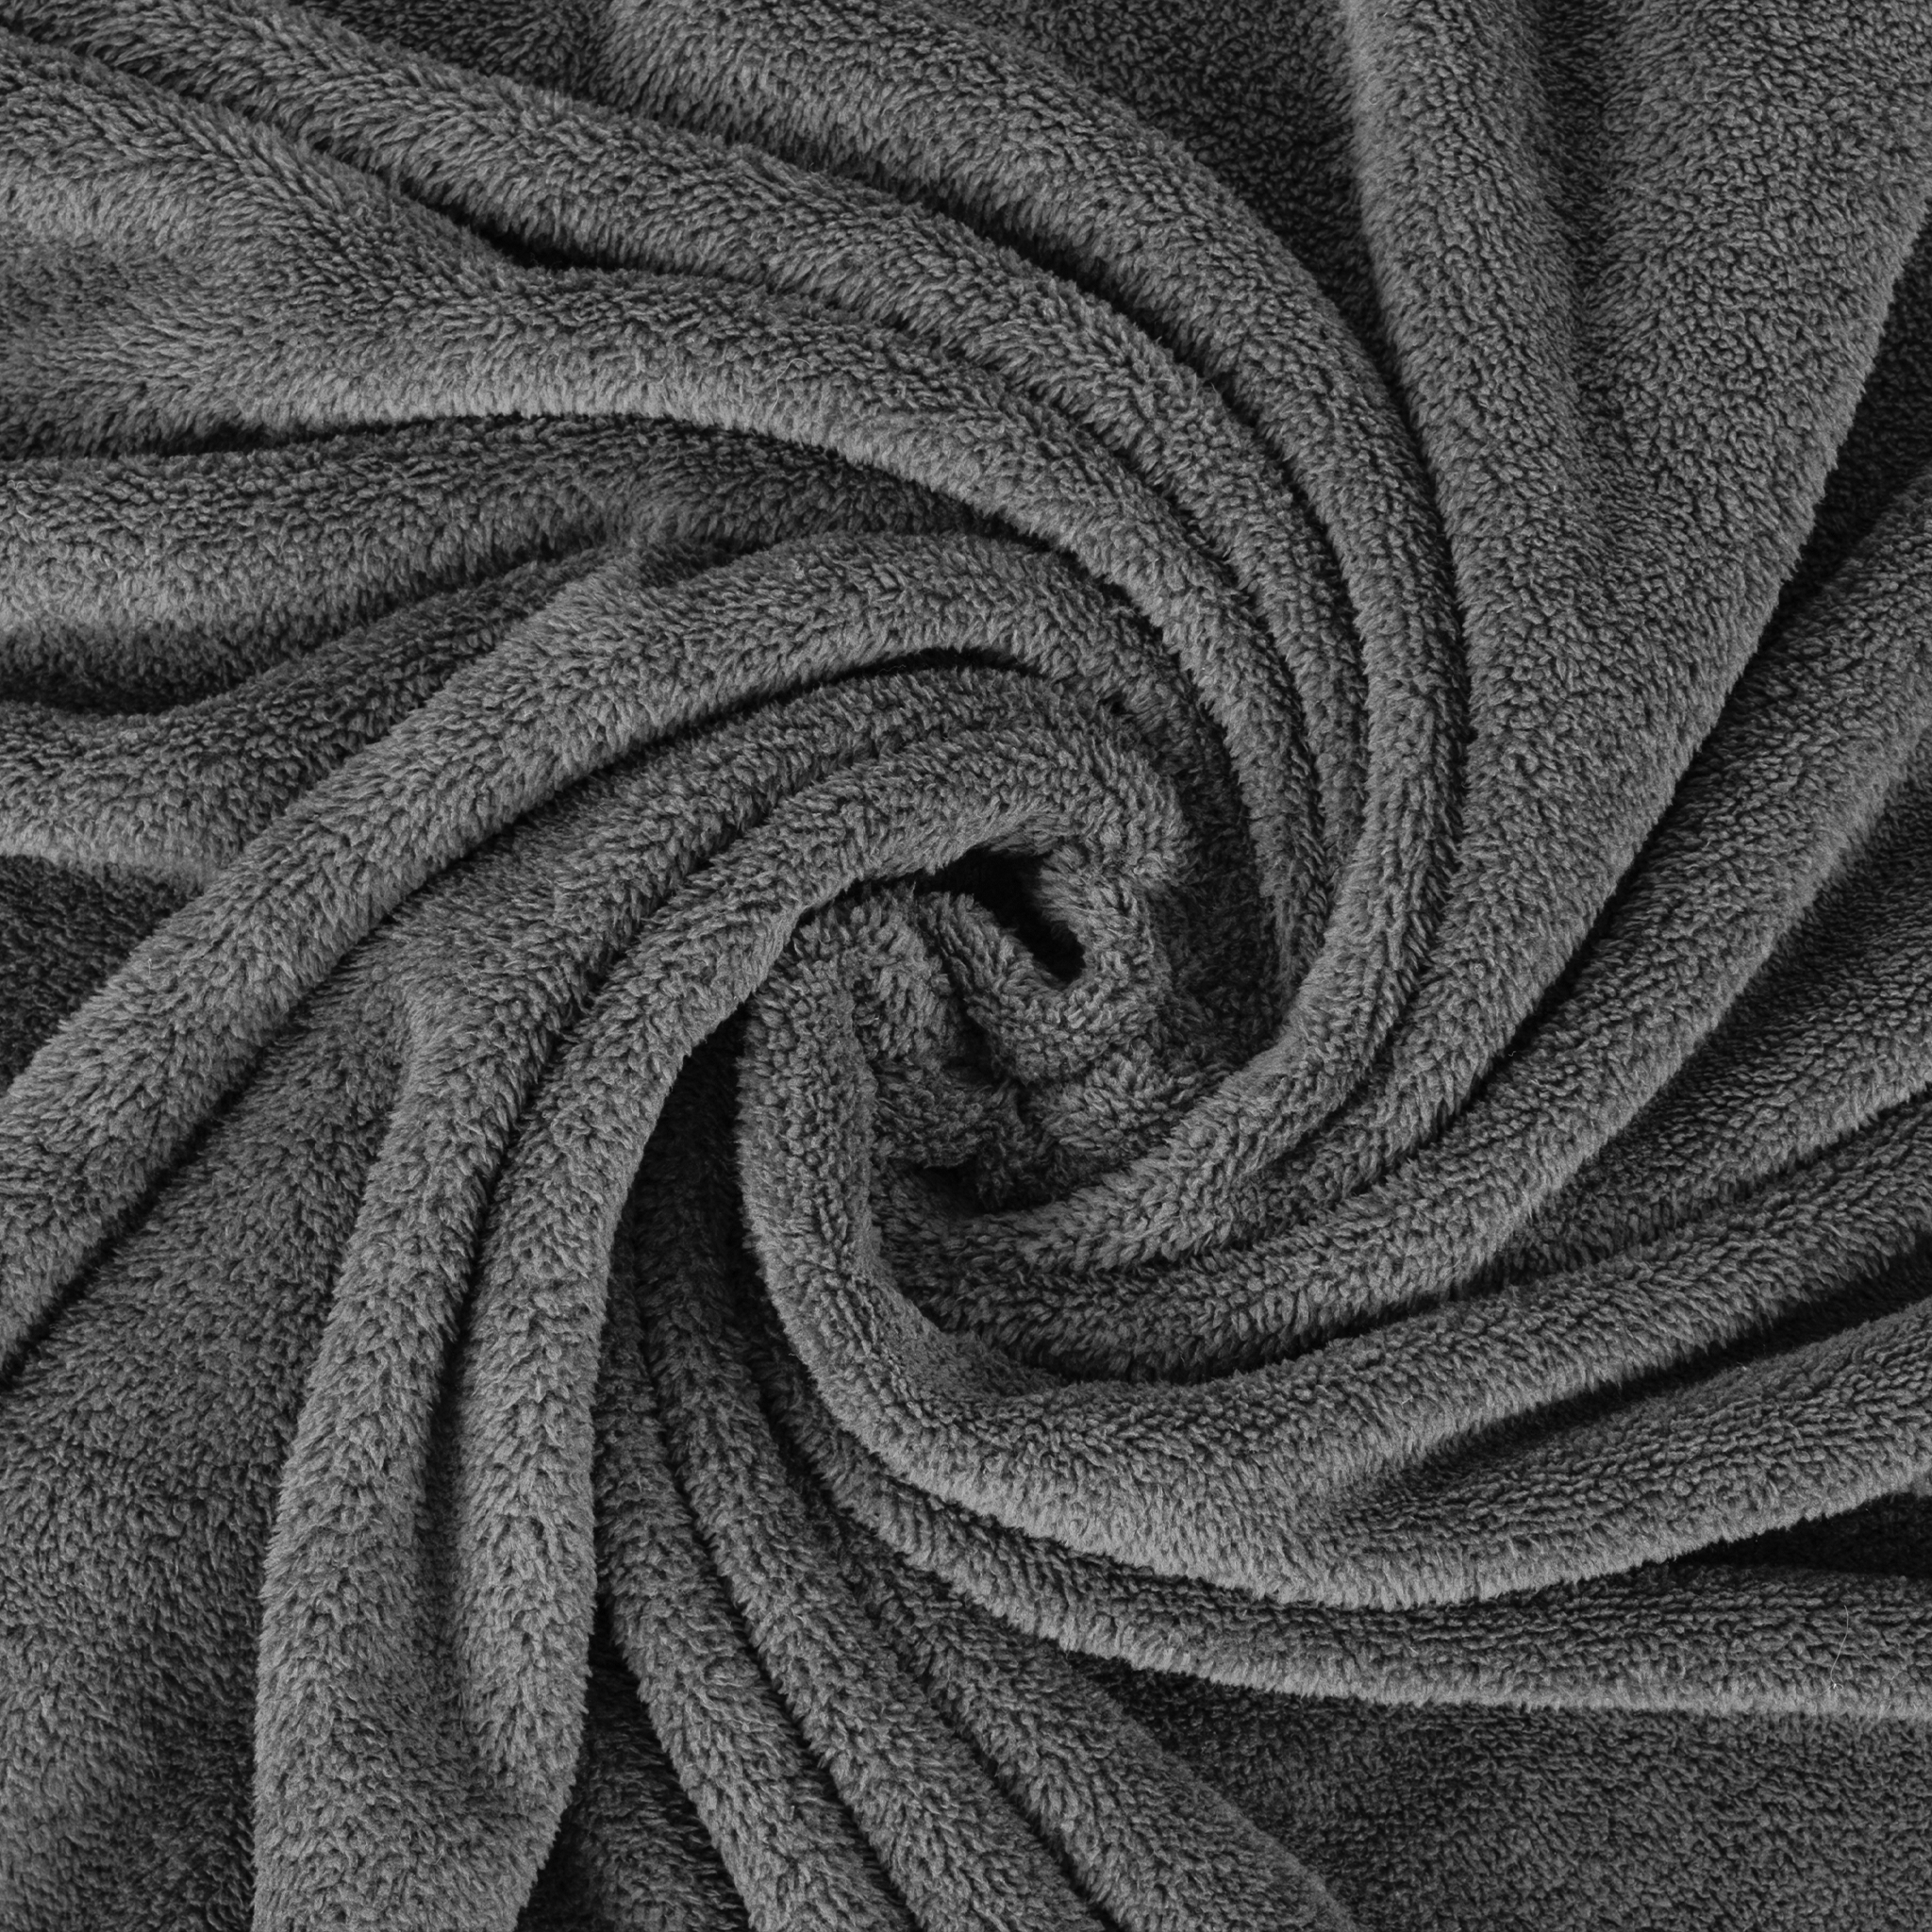 American Soft Linen - Bedding Fleece Blanket - Wholesale - 9 Set Case Pack - Queen Size 85x90 inches - Gray - 5